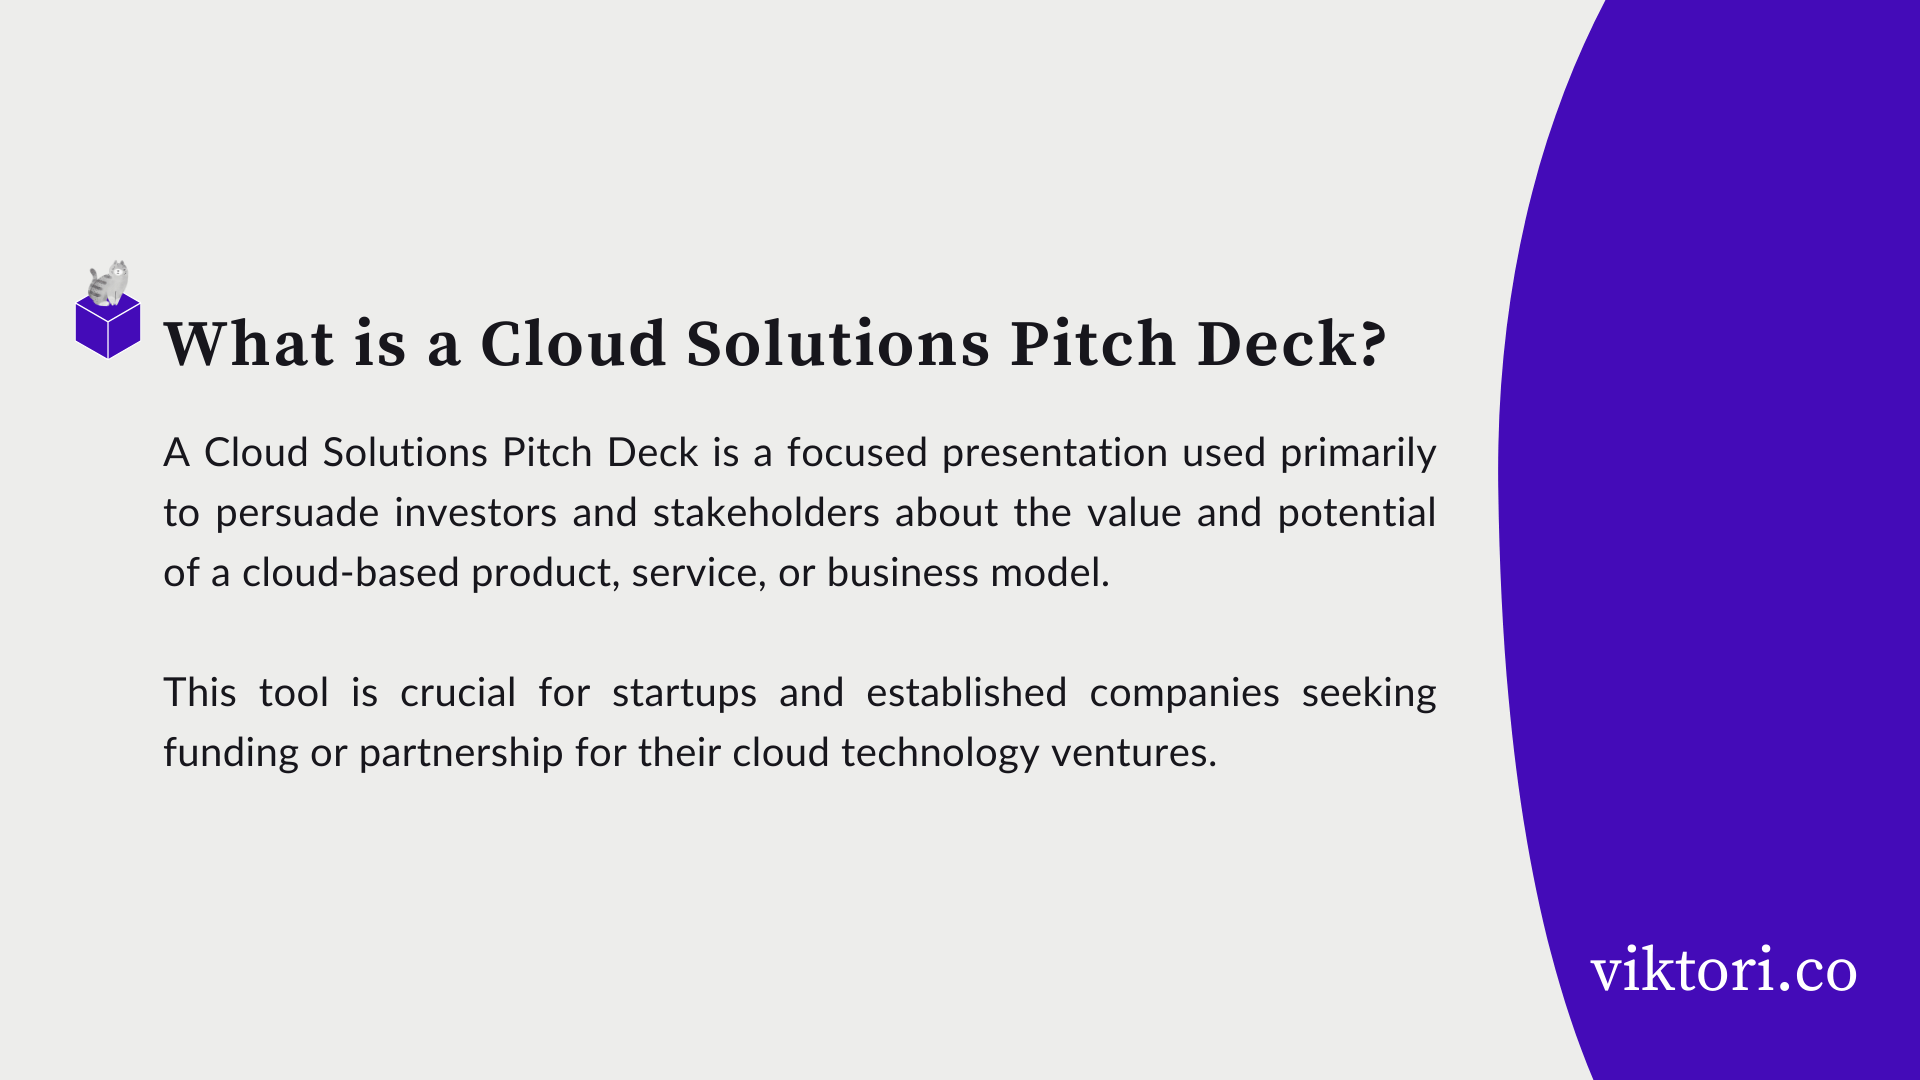 cloud solutions pitch deck definition